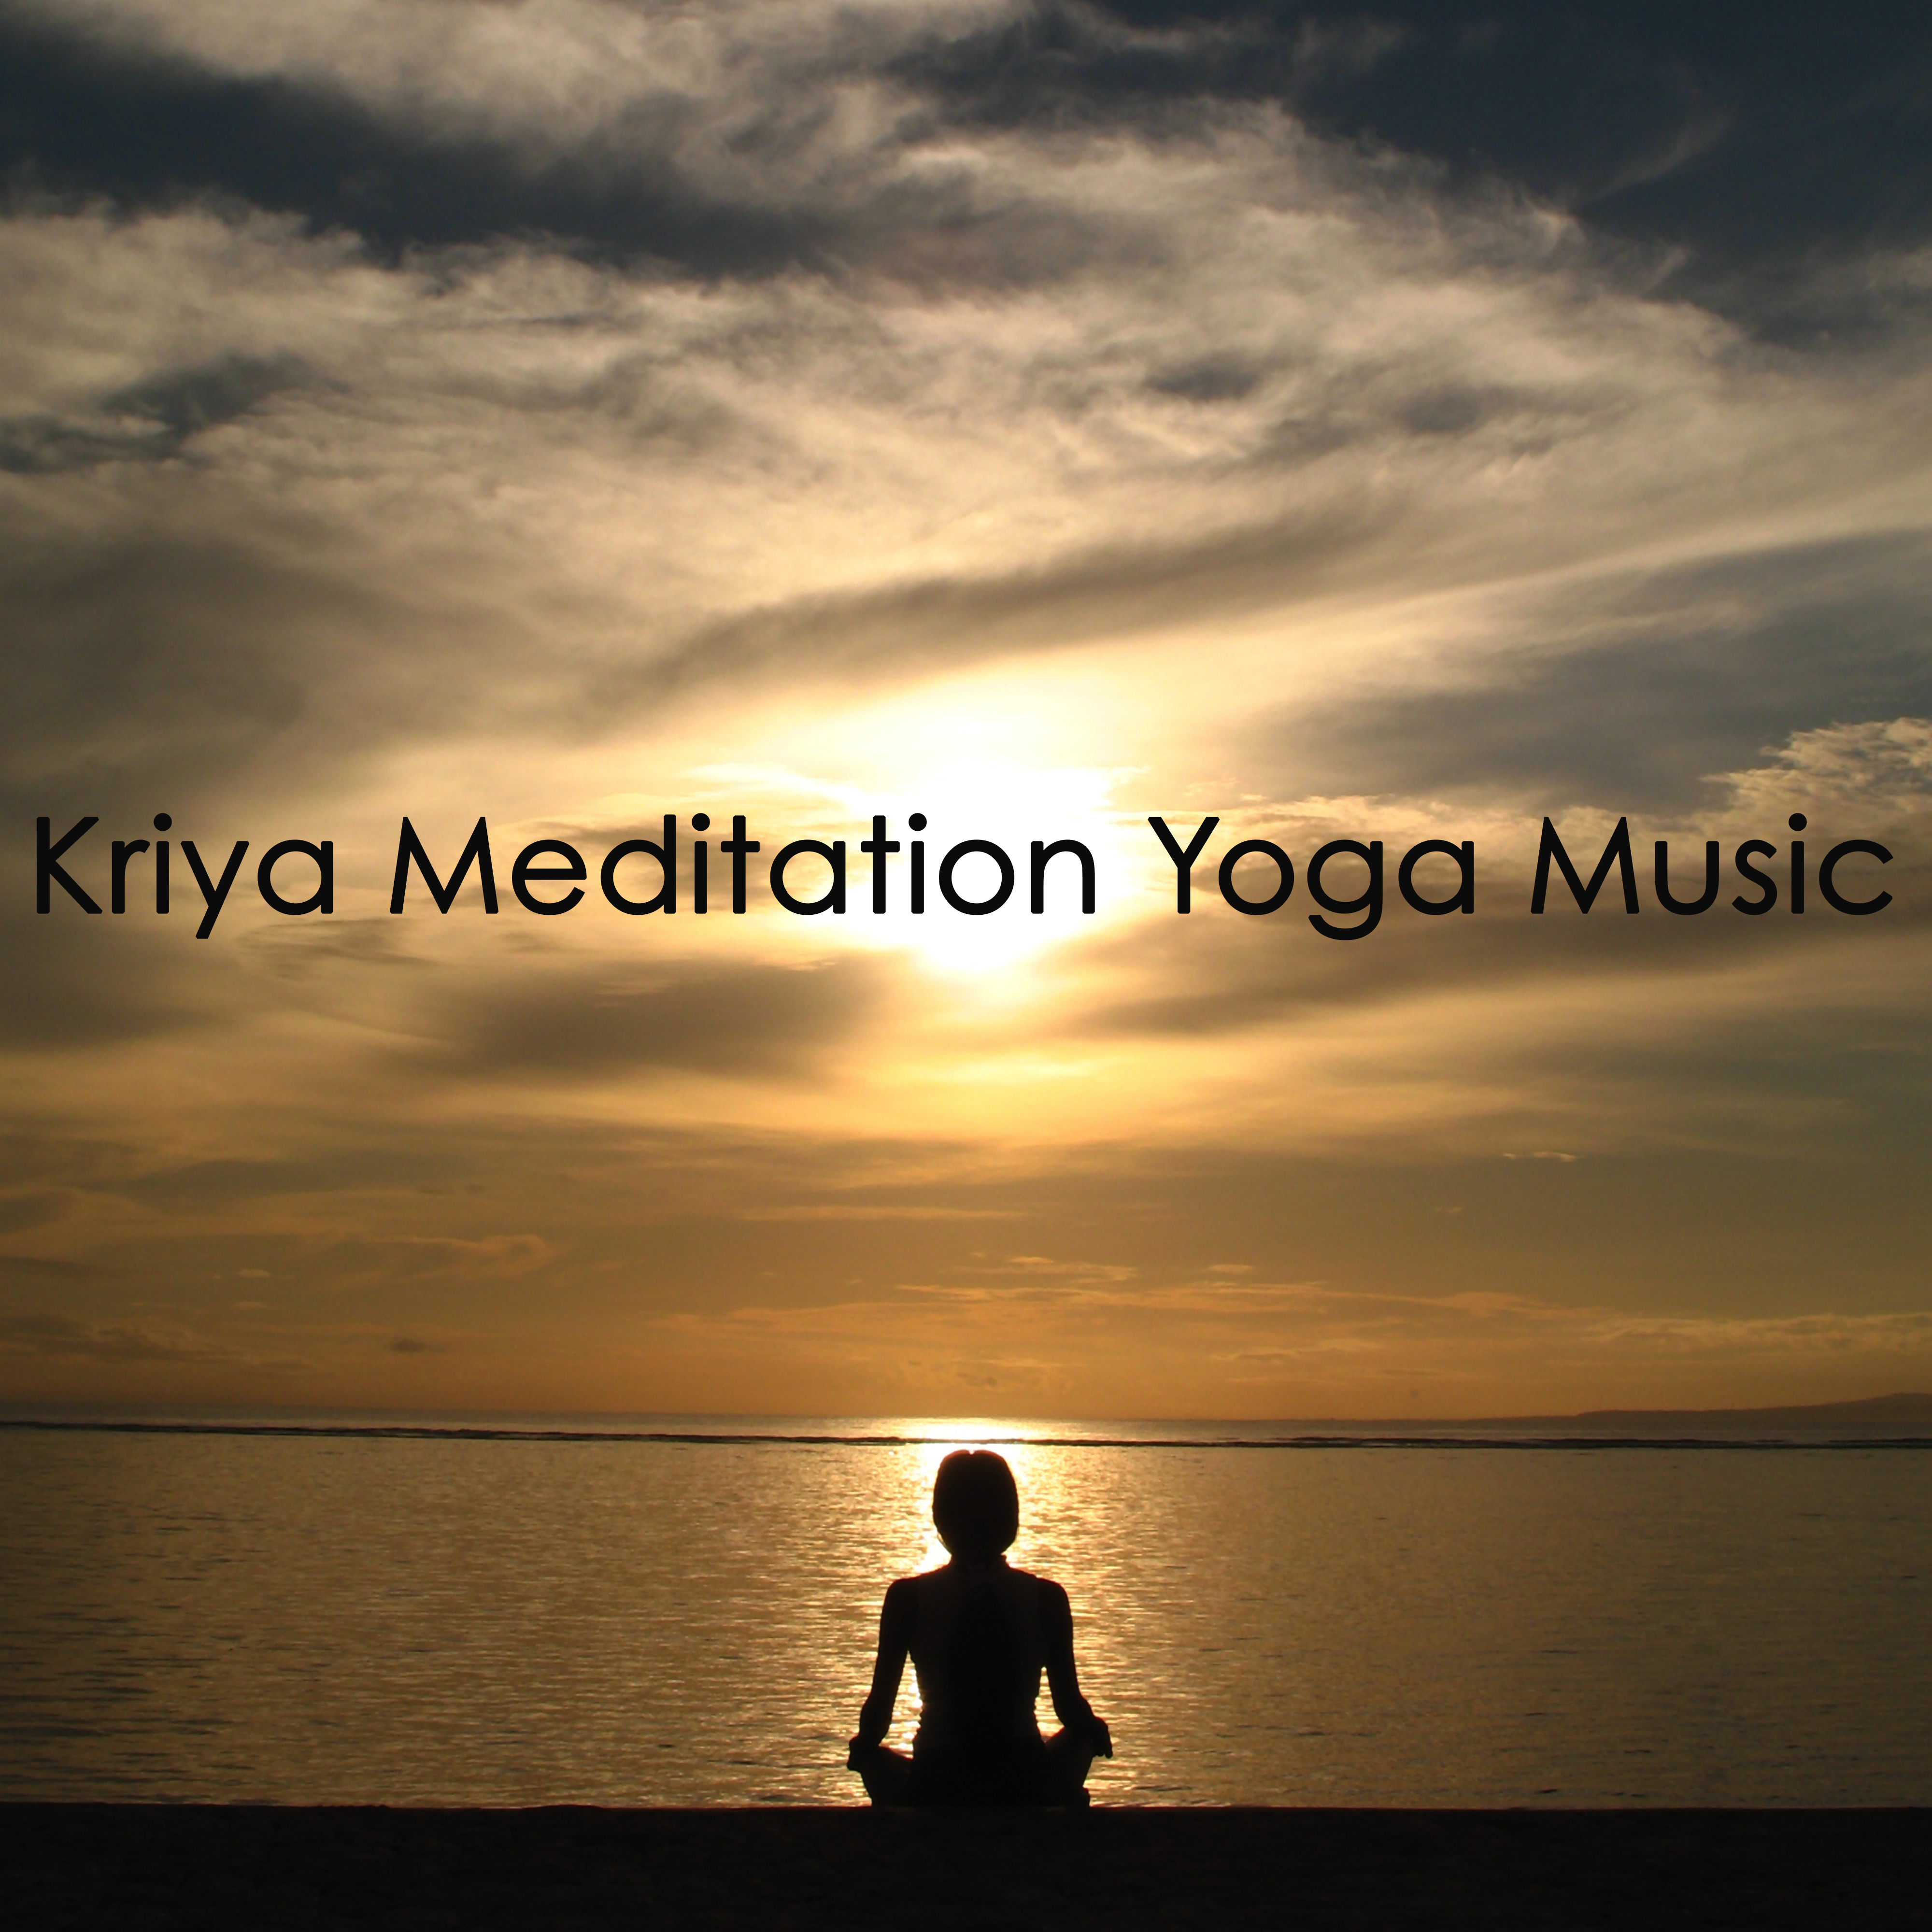 Kriya Meditation Yoga Music - Relaxing Sounds World Music for Raja Yoga, Pranayama, Meditation & Breathing